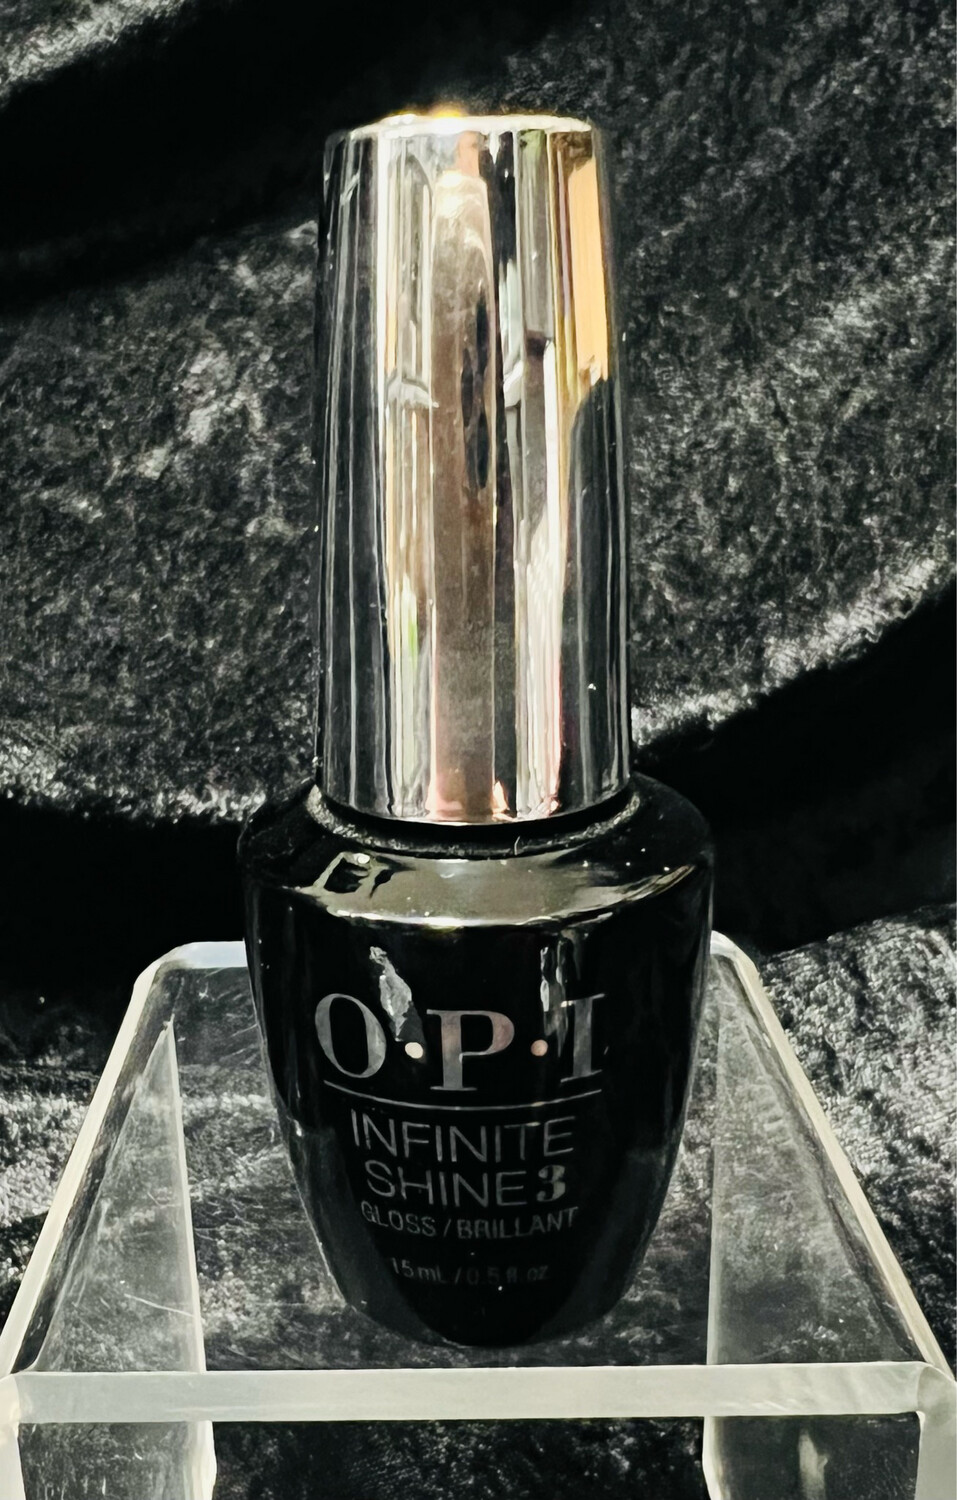 OPI Infinite Shine3 Gloss 5oz